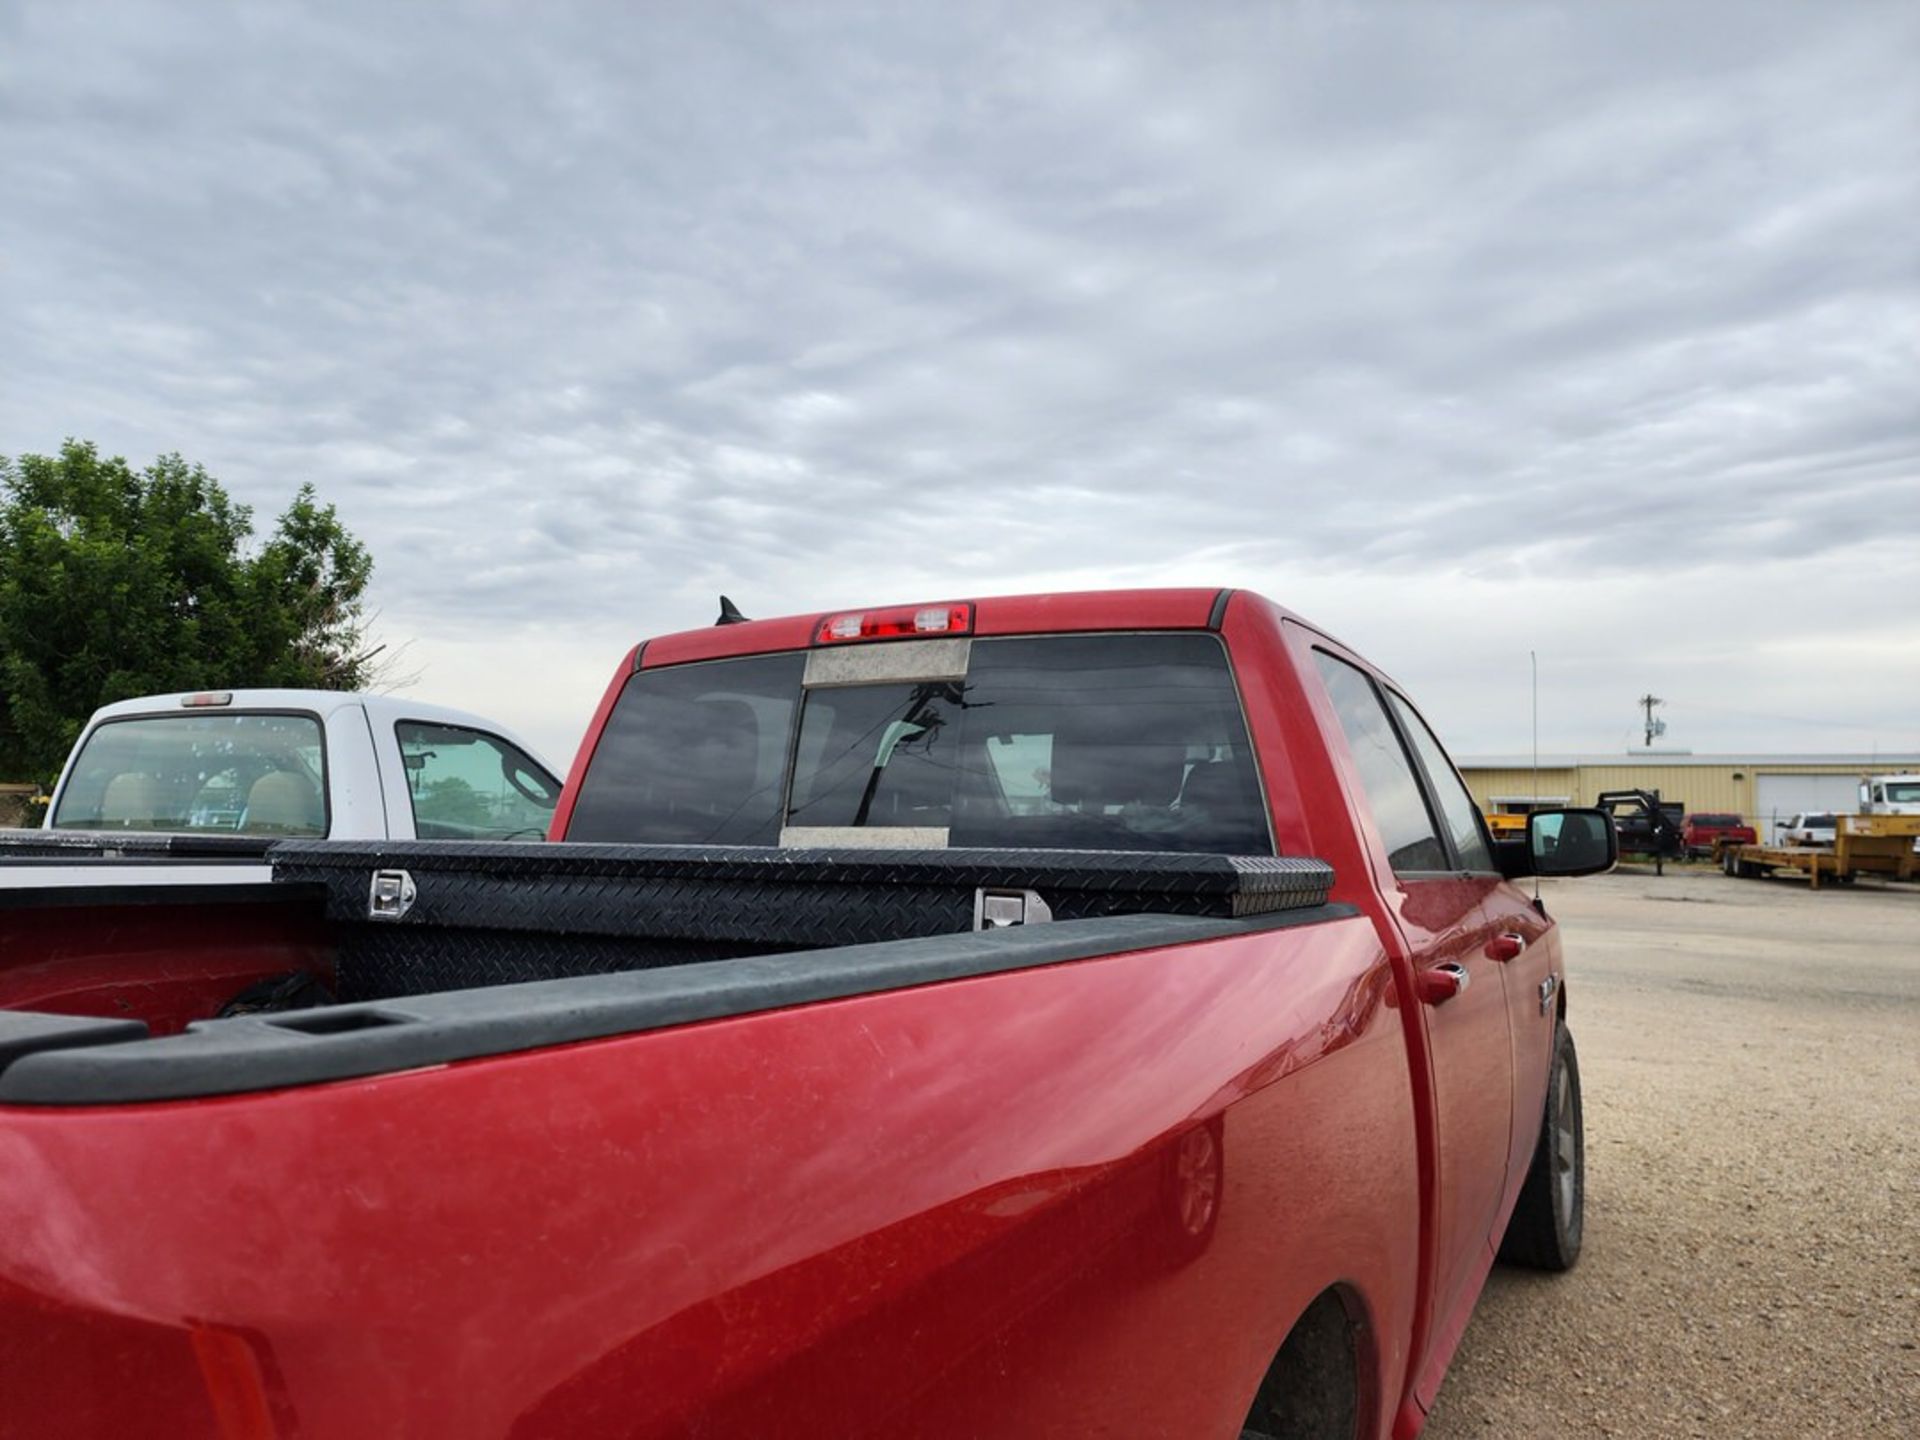 2017 Dodge Ram 1500 Hemi Truck (Gasoline) Mileage: 89,578 ; Vin: 1C6RR7T2HS719480; TX Plate: JXZ- - Image 6 of 19